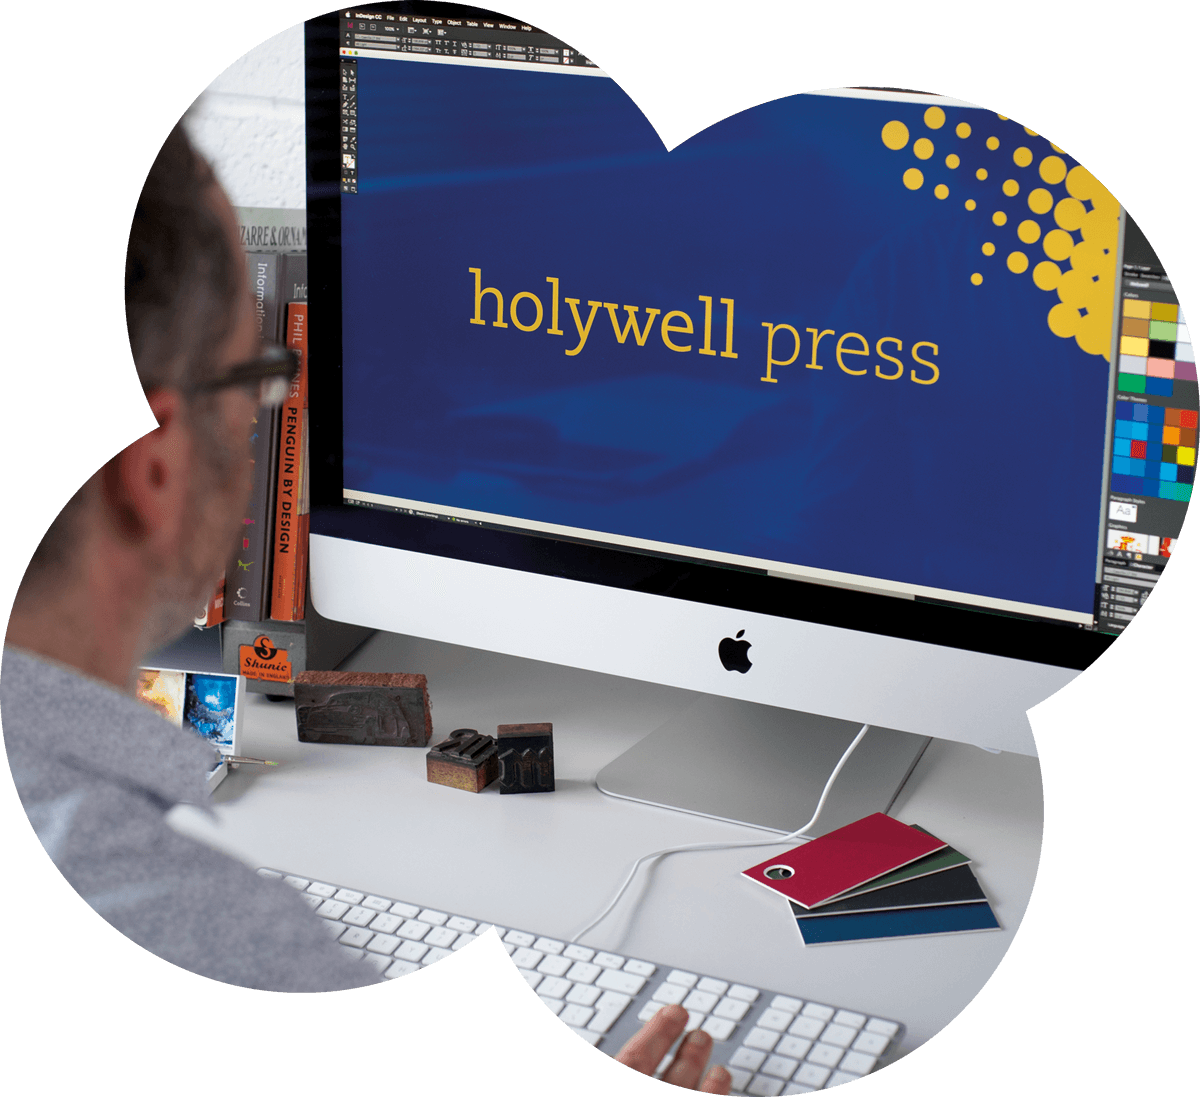 Holywell Press today